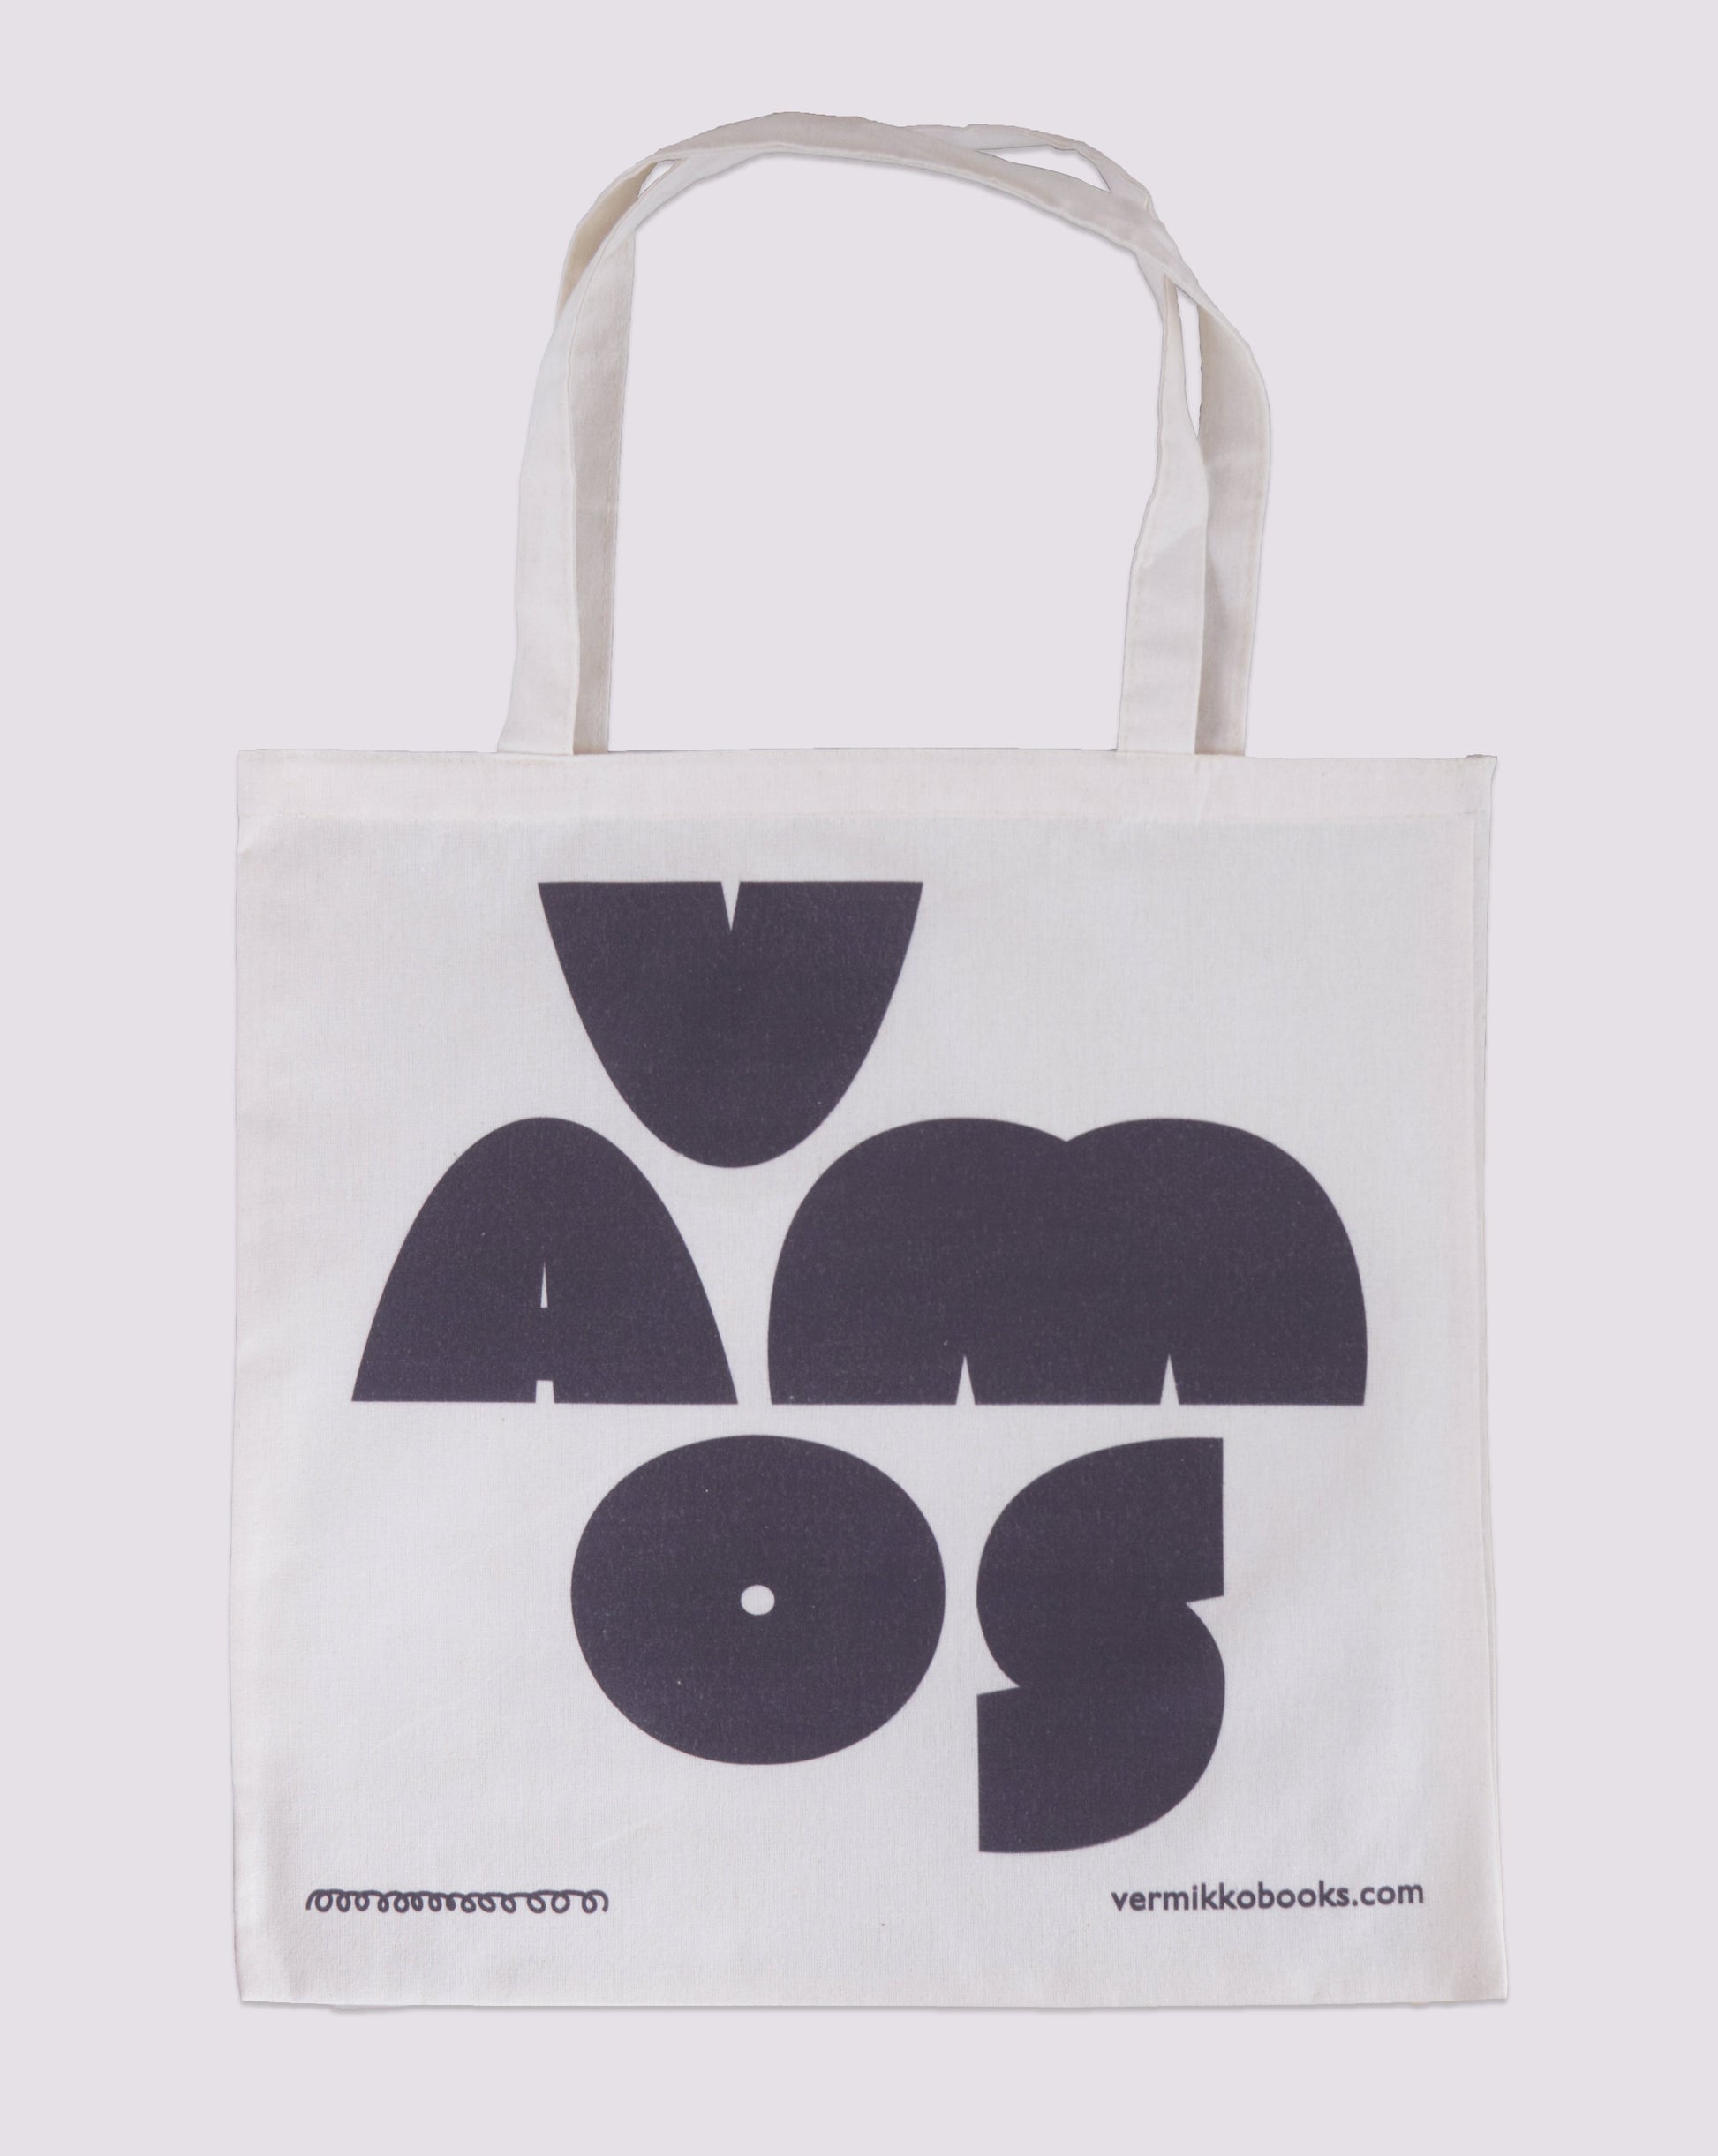 Tote bag designed by Vermikko Books